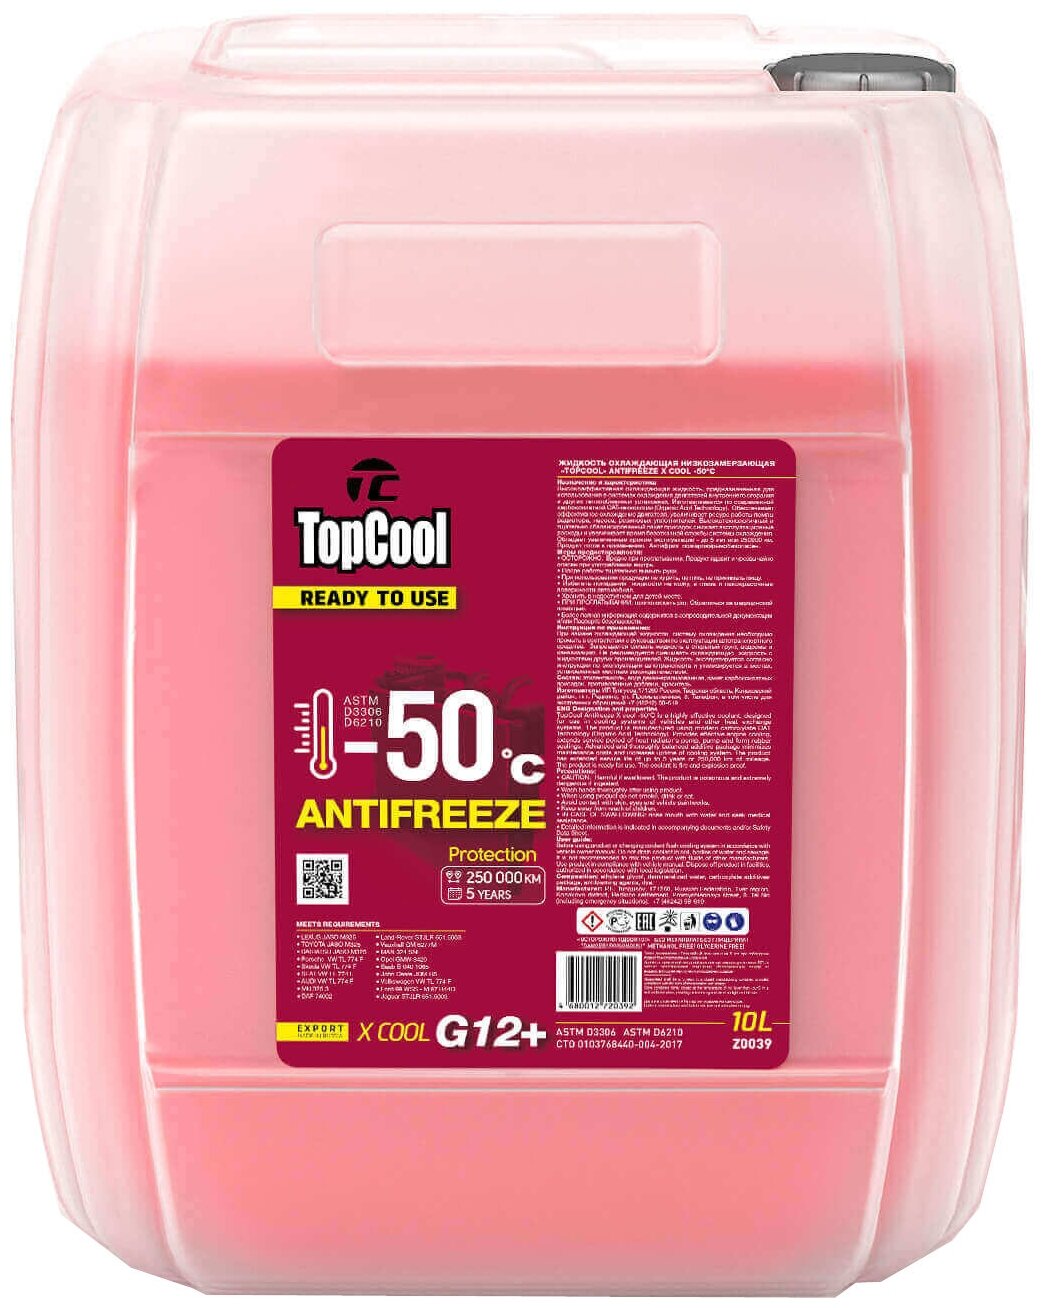  Topcool Antifreeze  Cool G-12+ Red -50c (10)  TOPCOOL . Z0039TOPCOOL